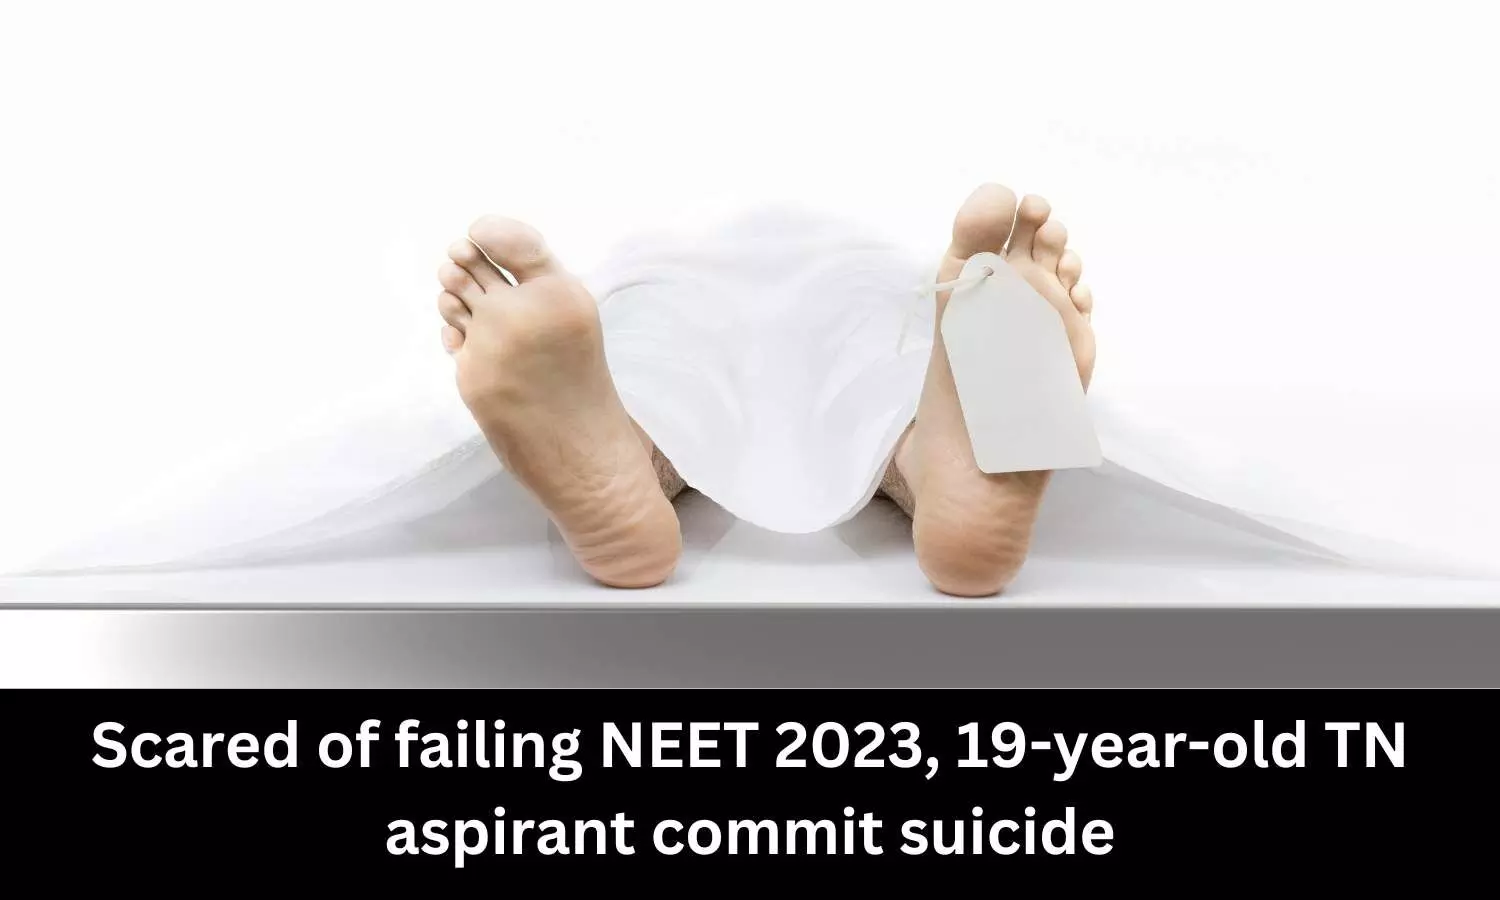 NEET aspirant commits suicide in Tamil Nadu